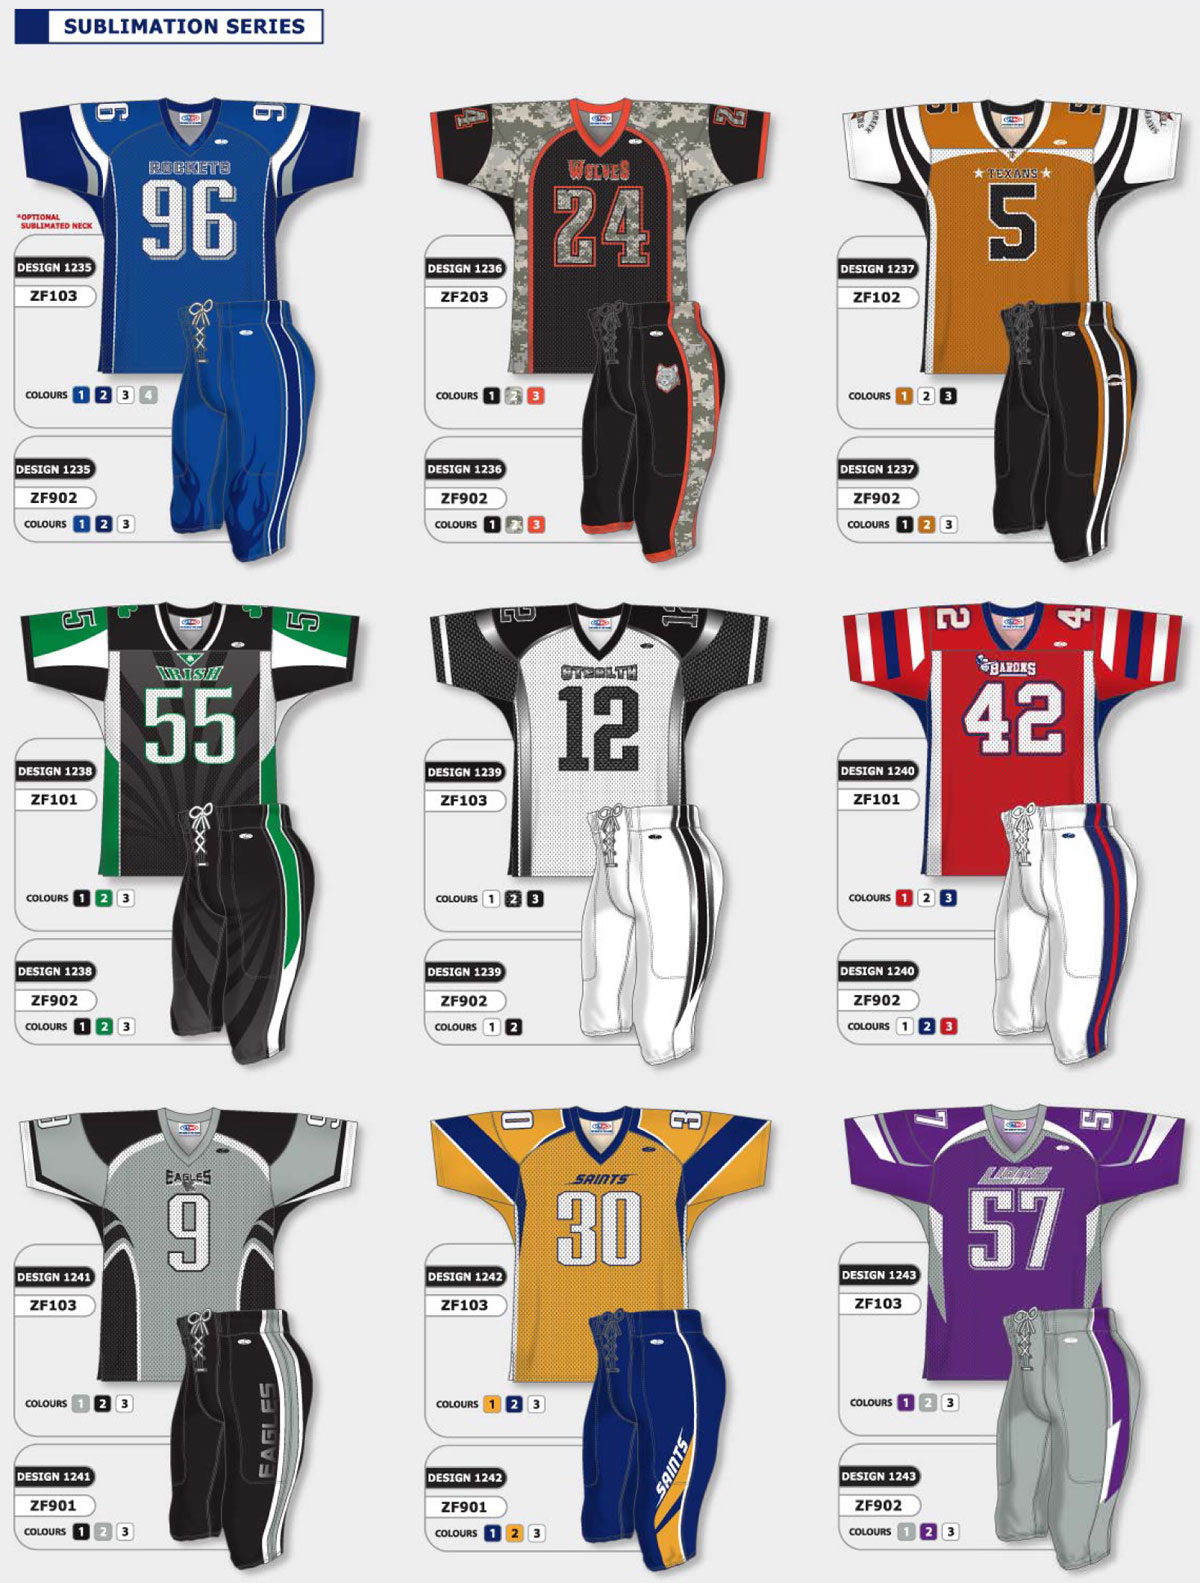 SPPSS - American Football Gridiron Uniforms